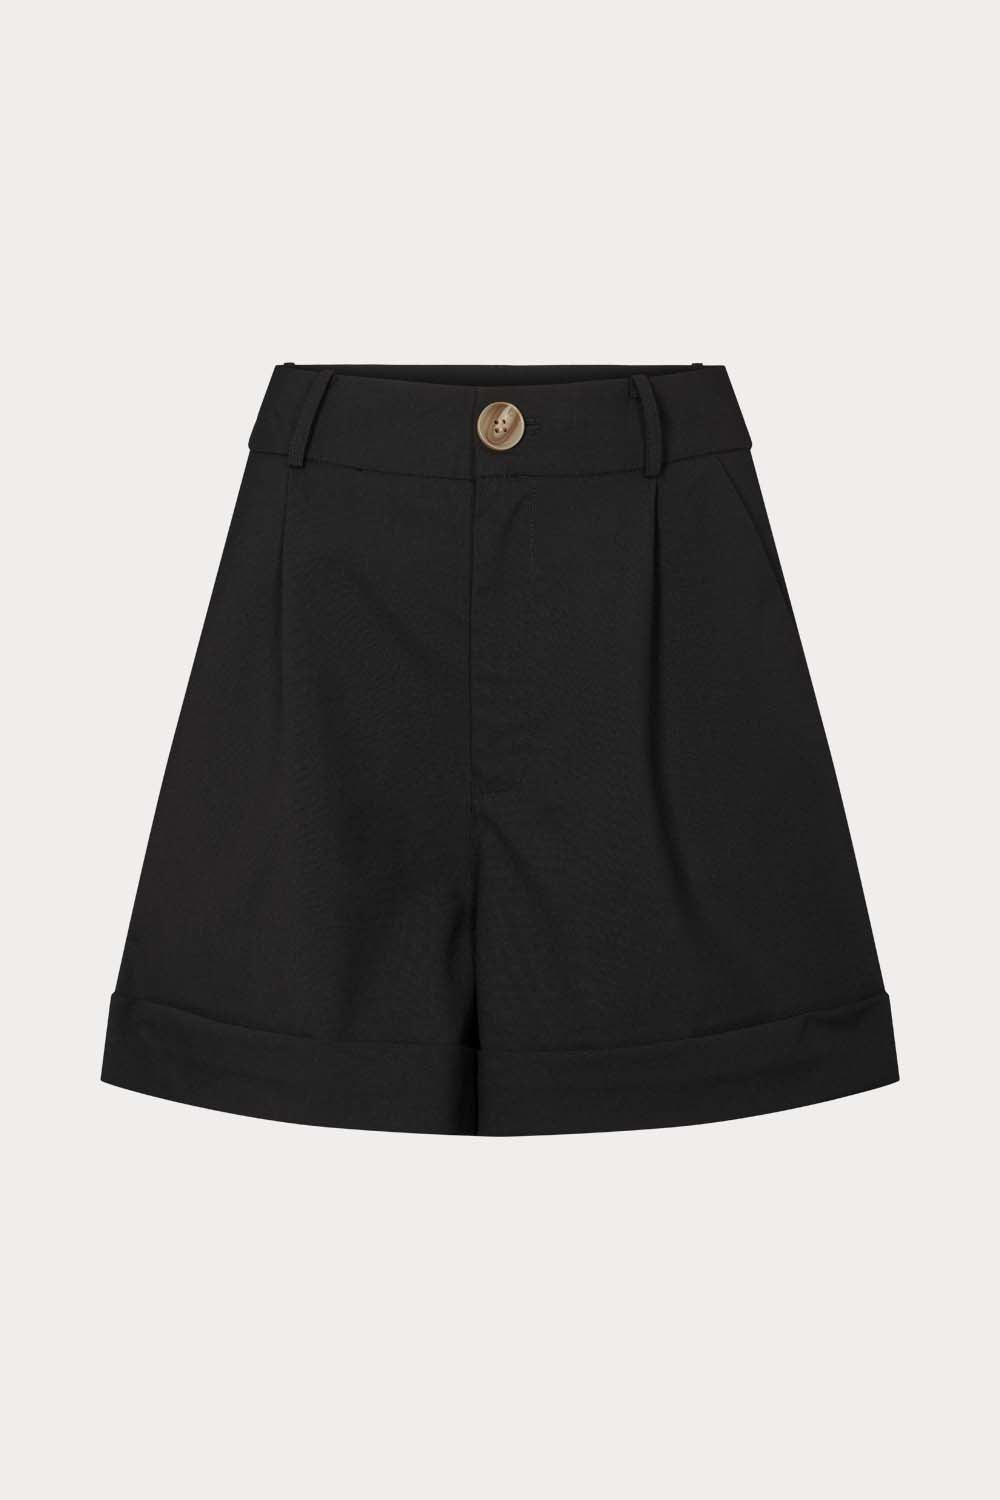 O'TAY Cecilie Shorts Shorts Black